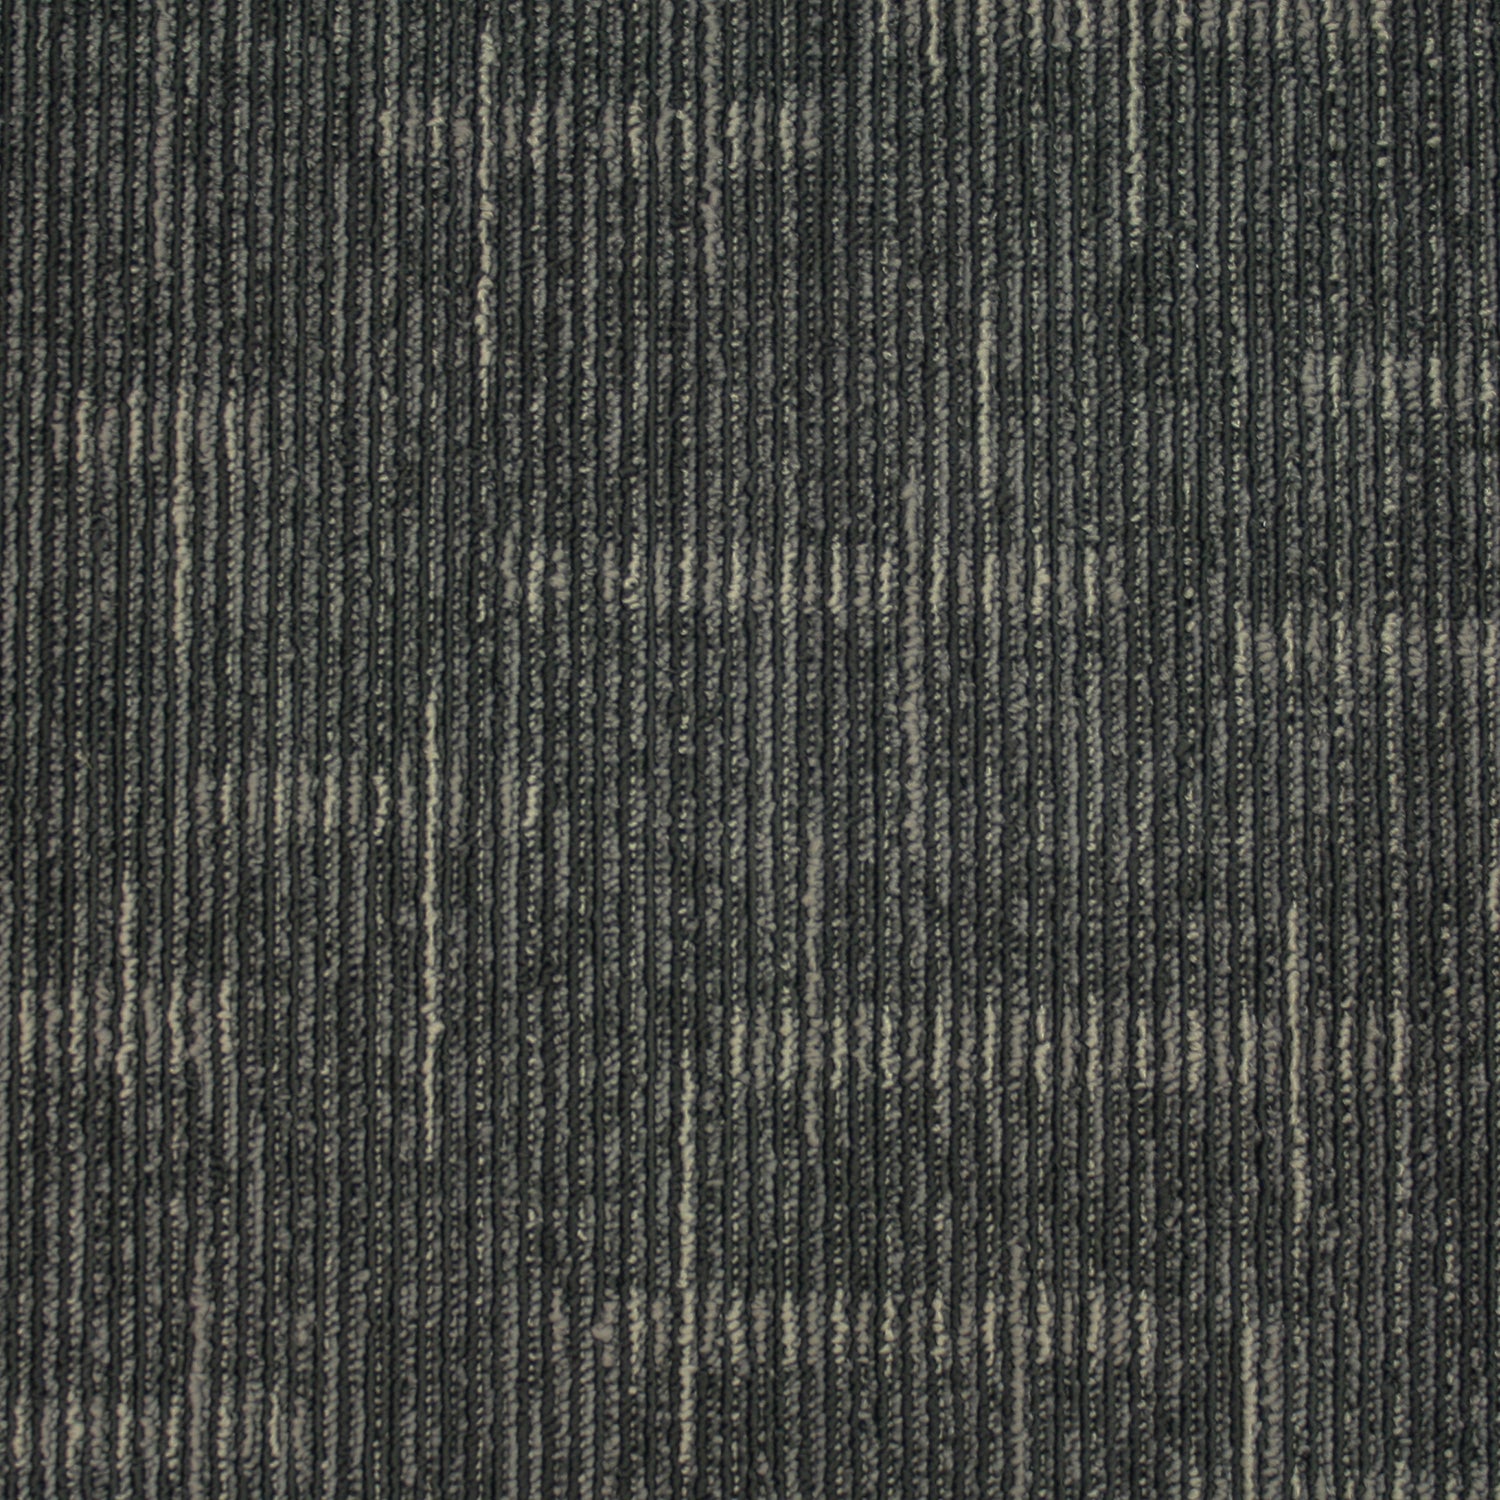 Kraus Carpet Tile Perspective Shape